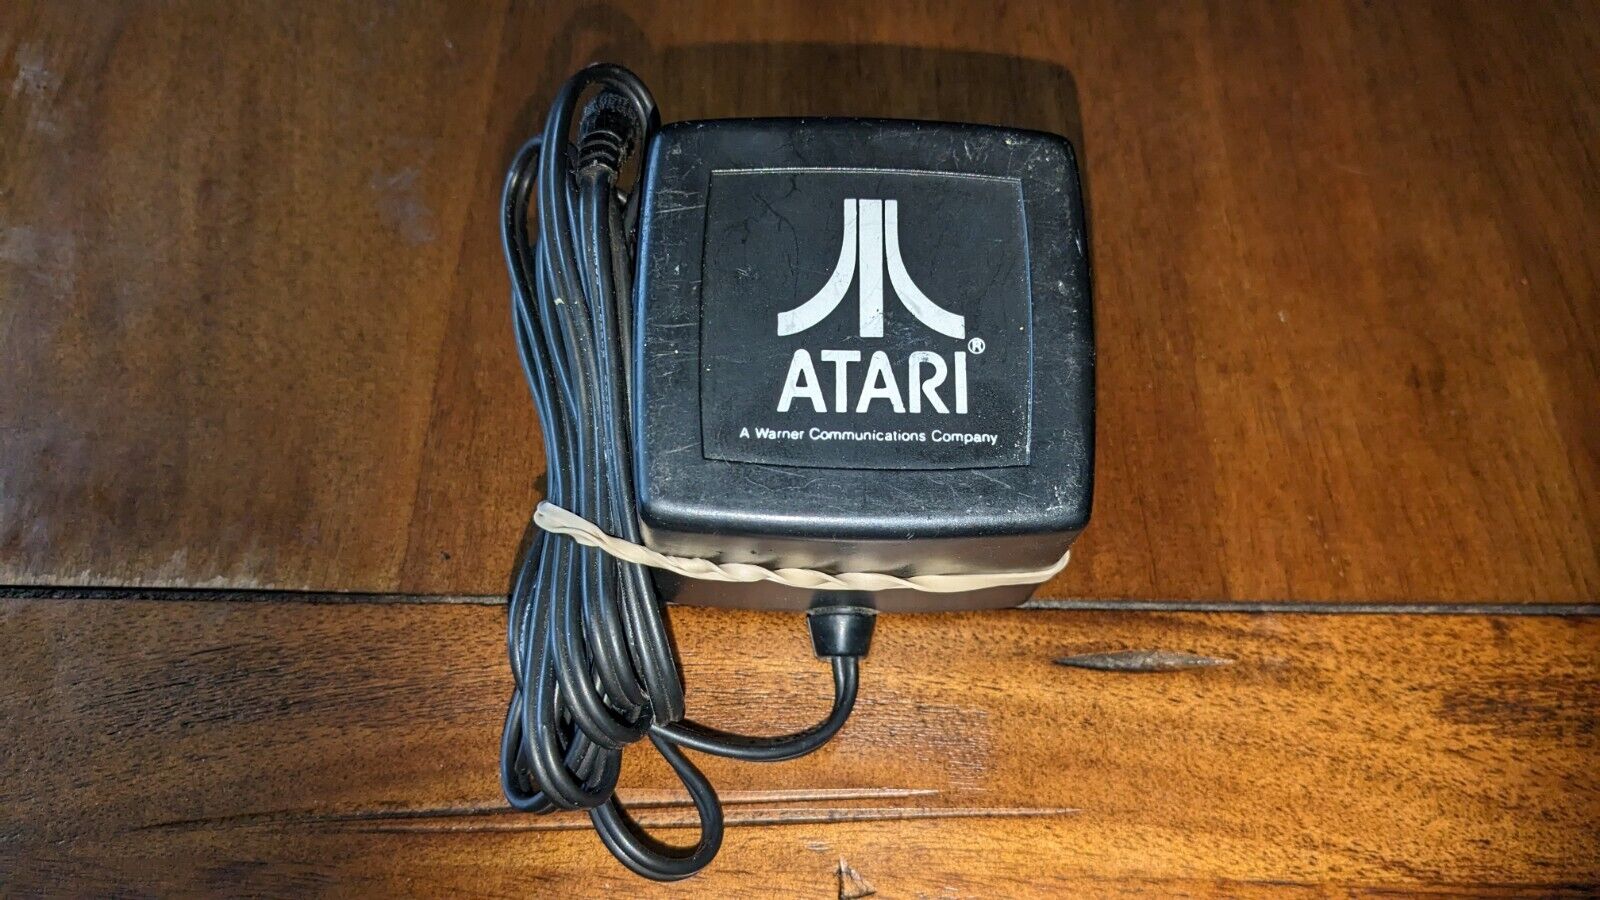 Atari C016804 Power Supply 1981 Very Rare and Works Perfectly